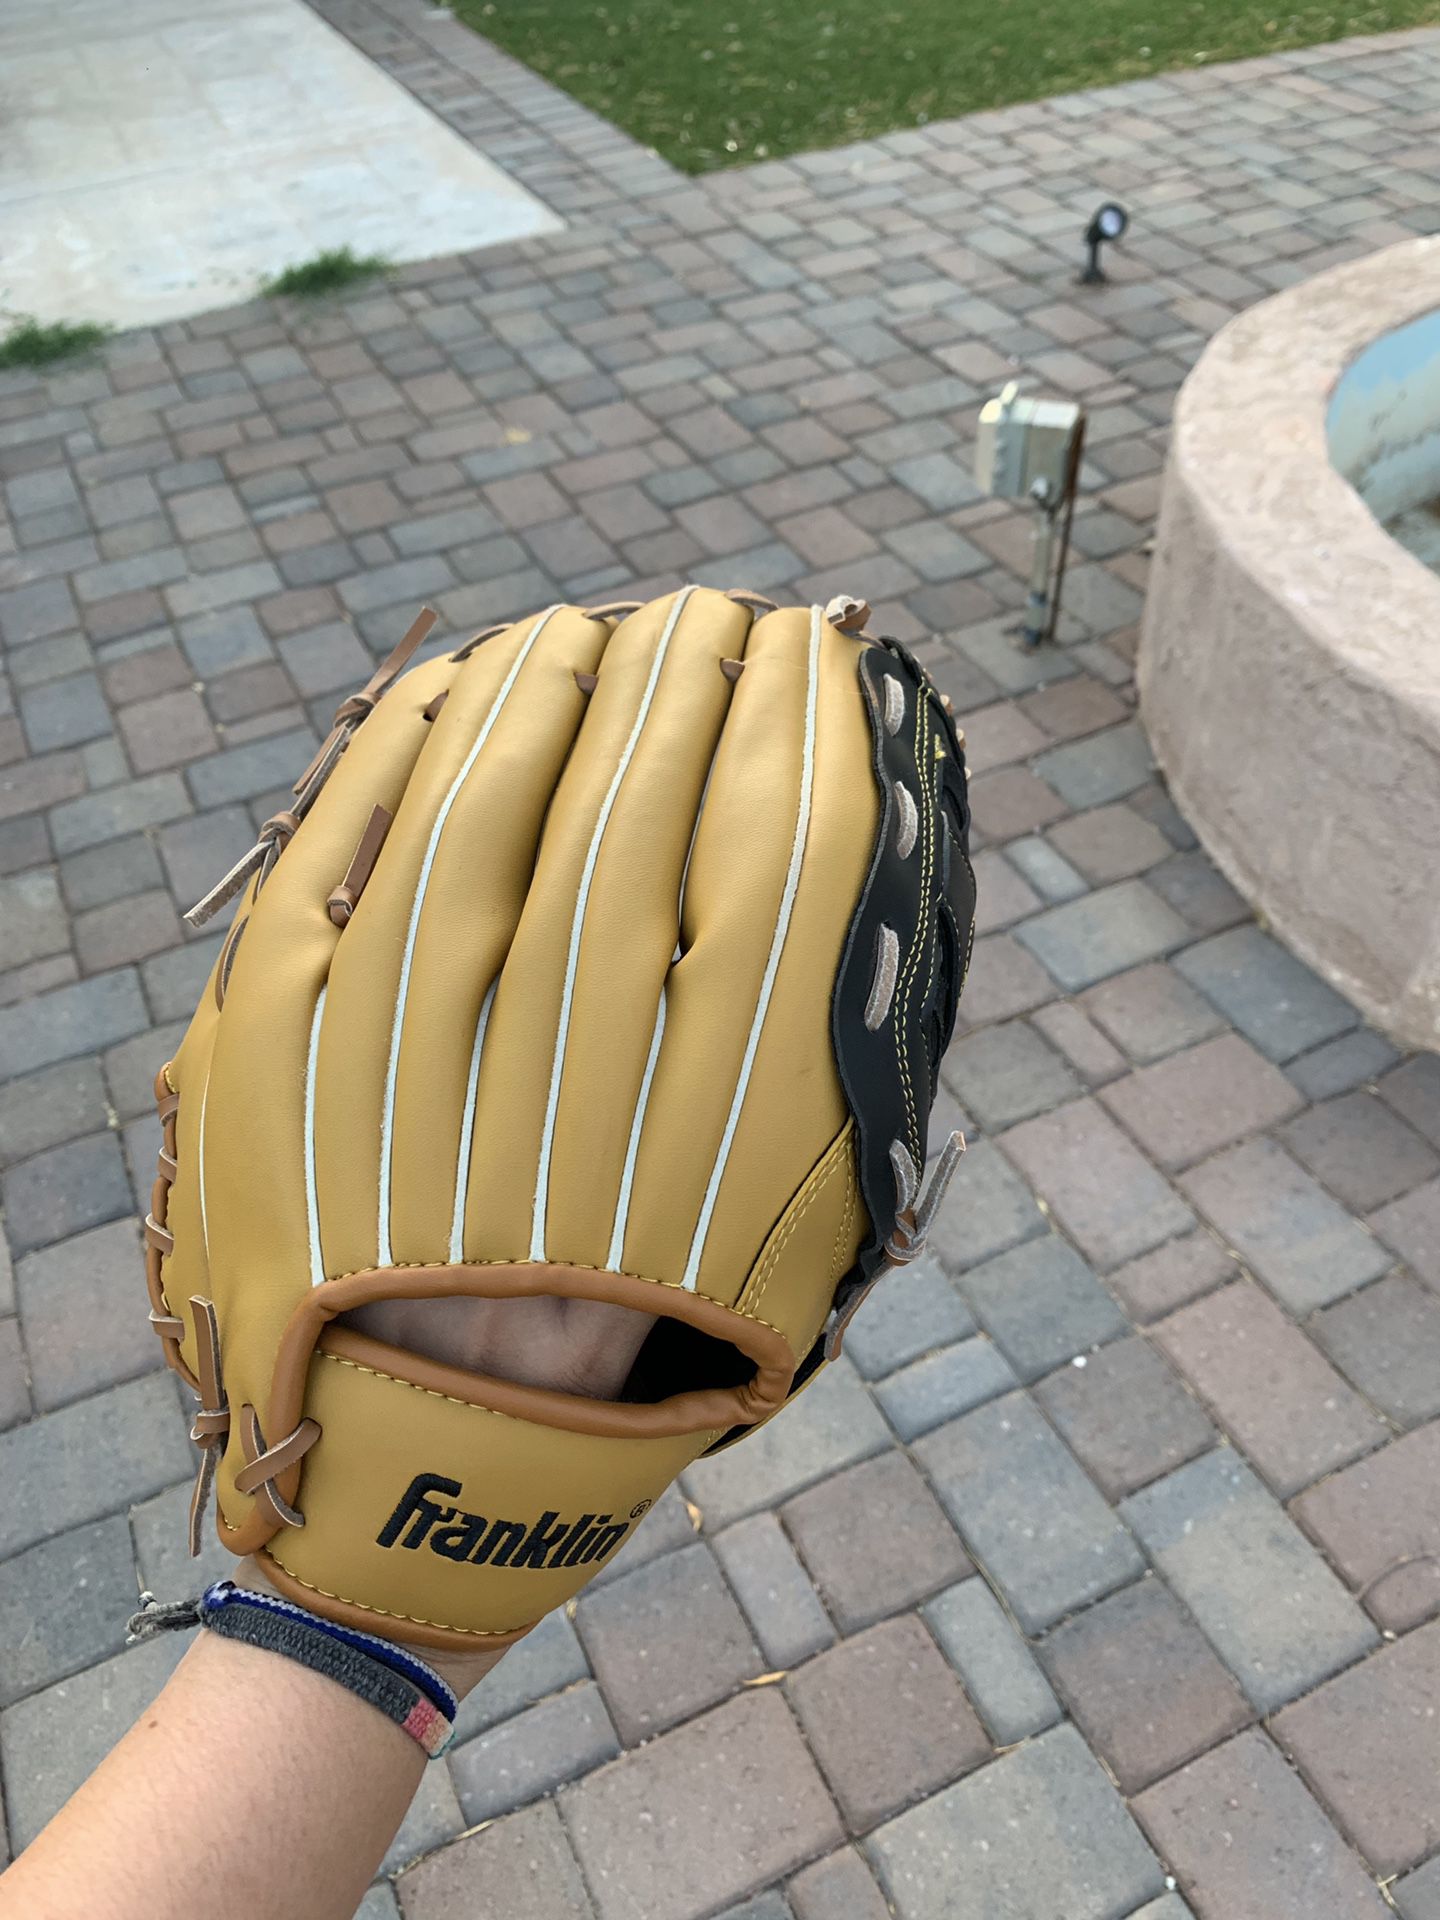 Adult Softball glove